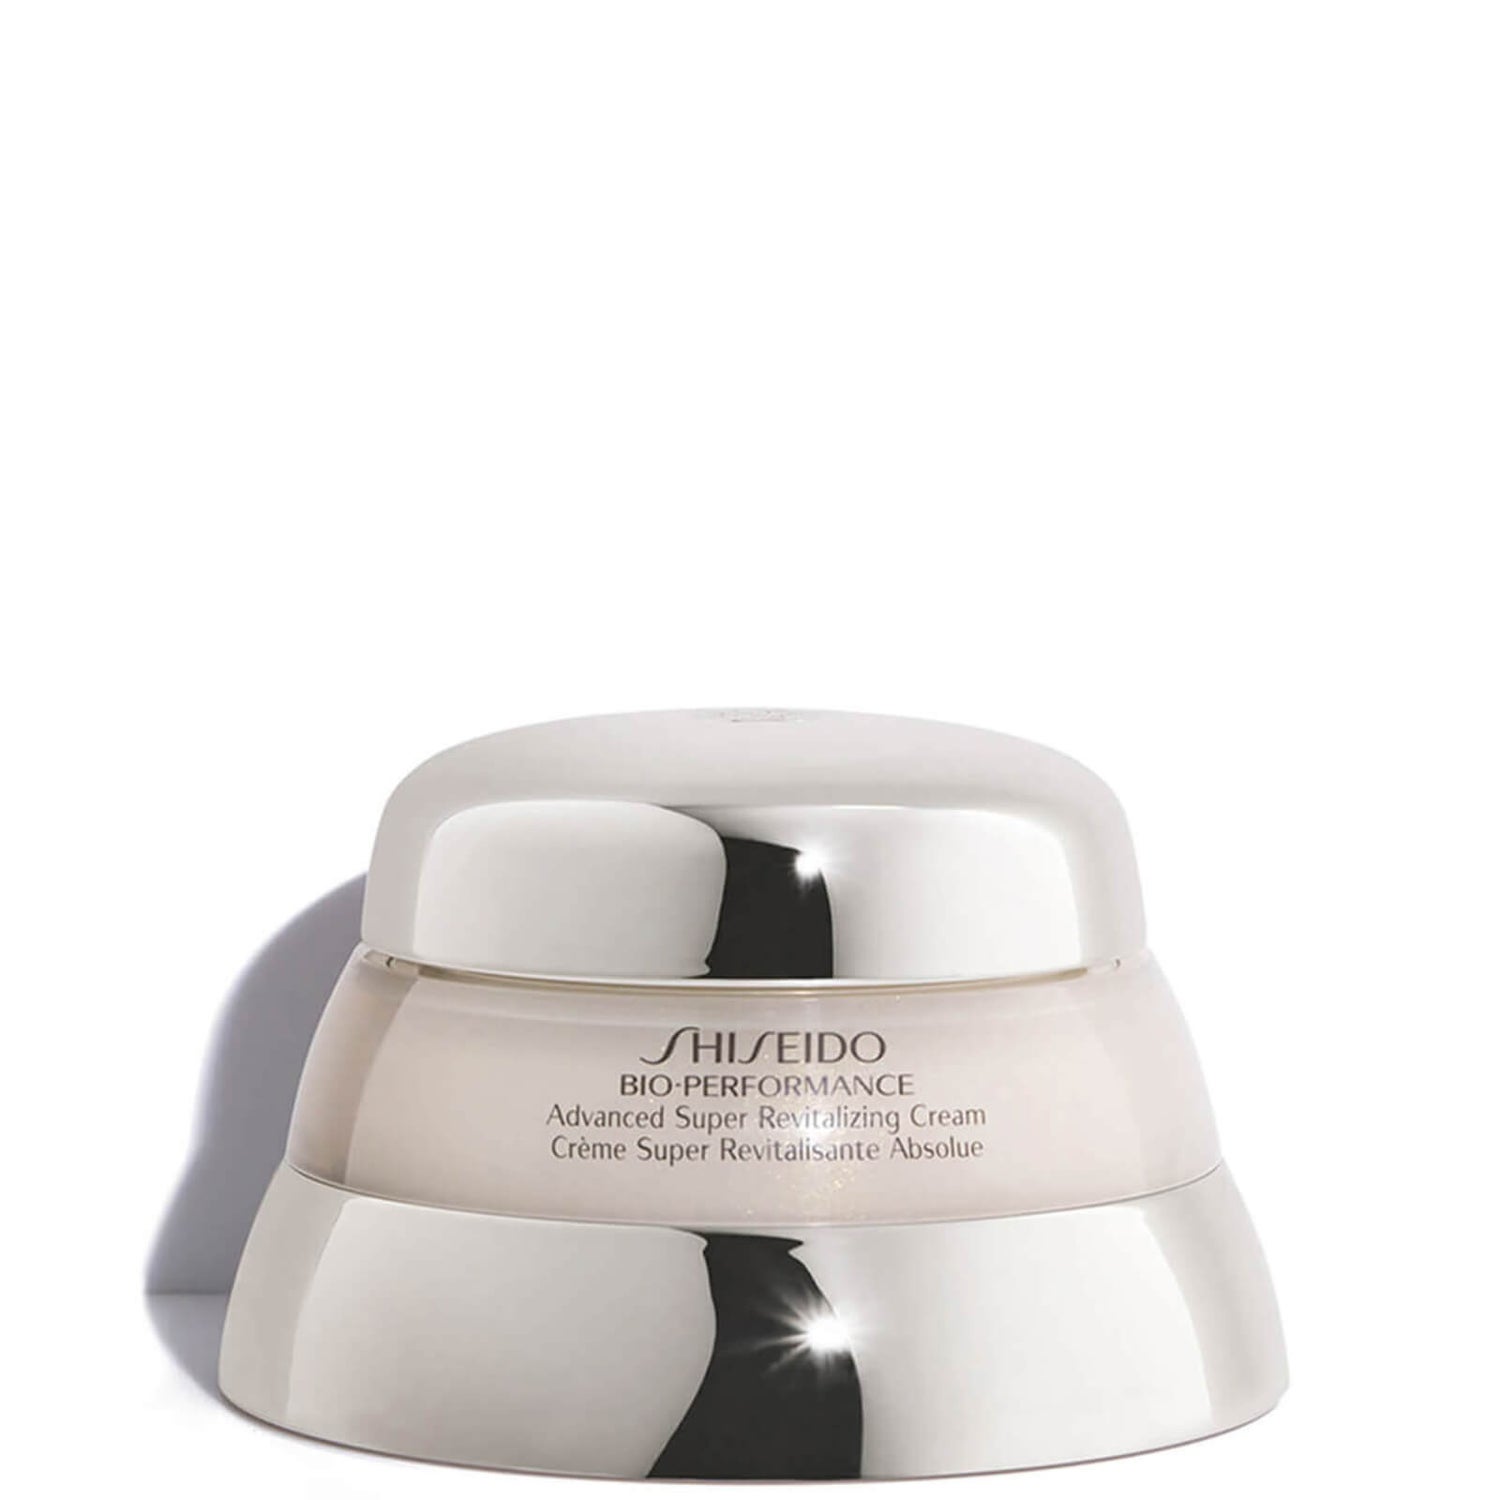 BioPerformance Advanced Super Revitalizing Cream de Shiseido (50ml)